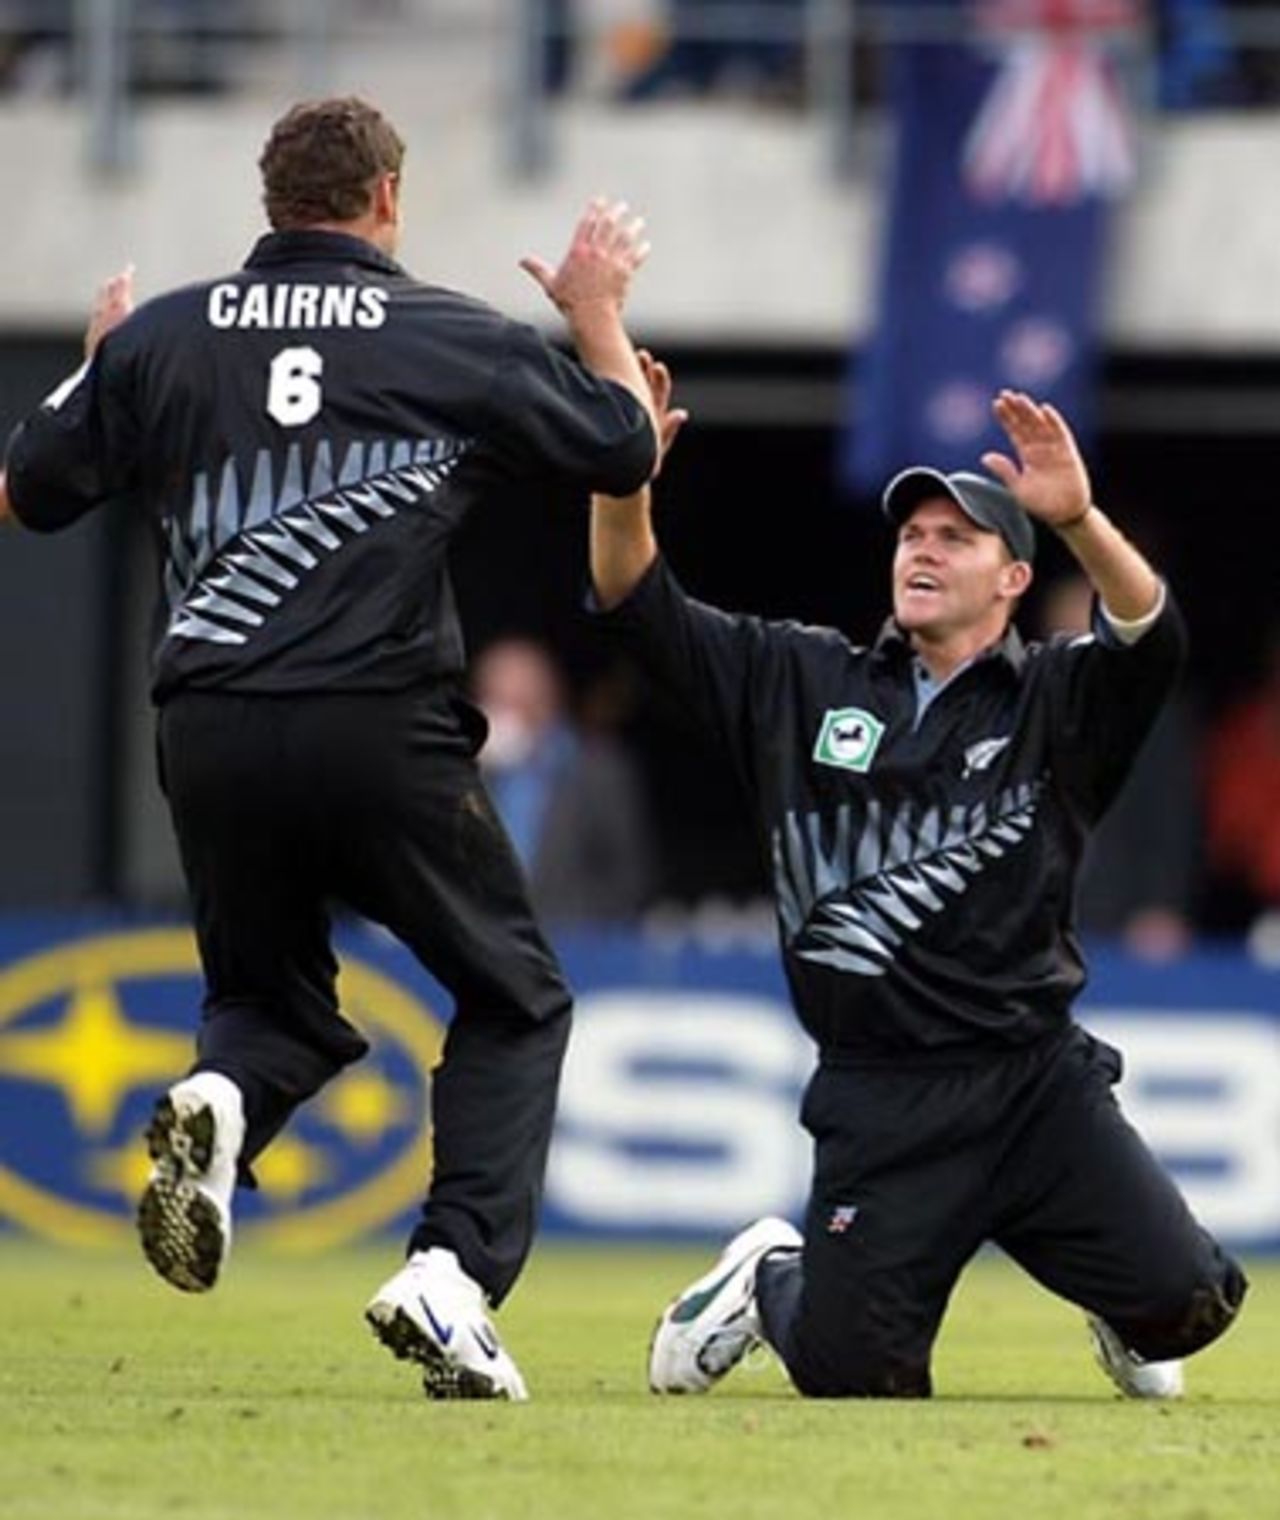 New Zealand bowler Chris Cairns and fielder Lou Vincent celebrate the dismissal of England batsman Andrew Flintoff, caught by Vincent for 12. 1st ODI: New Zealand v England at Jade Stadium, Christchurch, 13 February 2002.